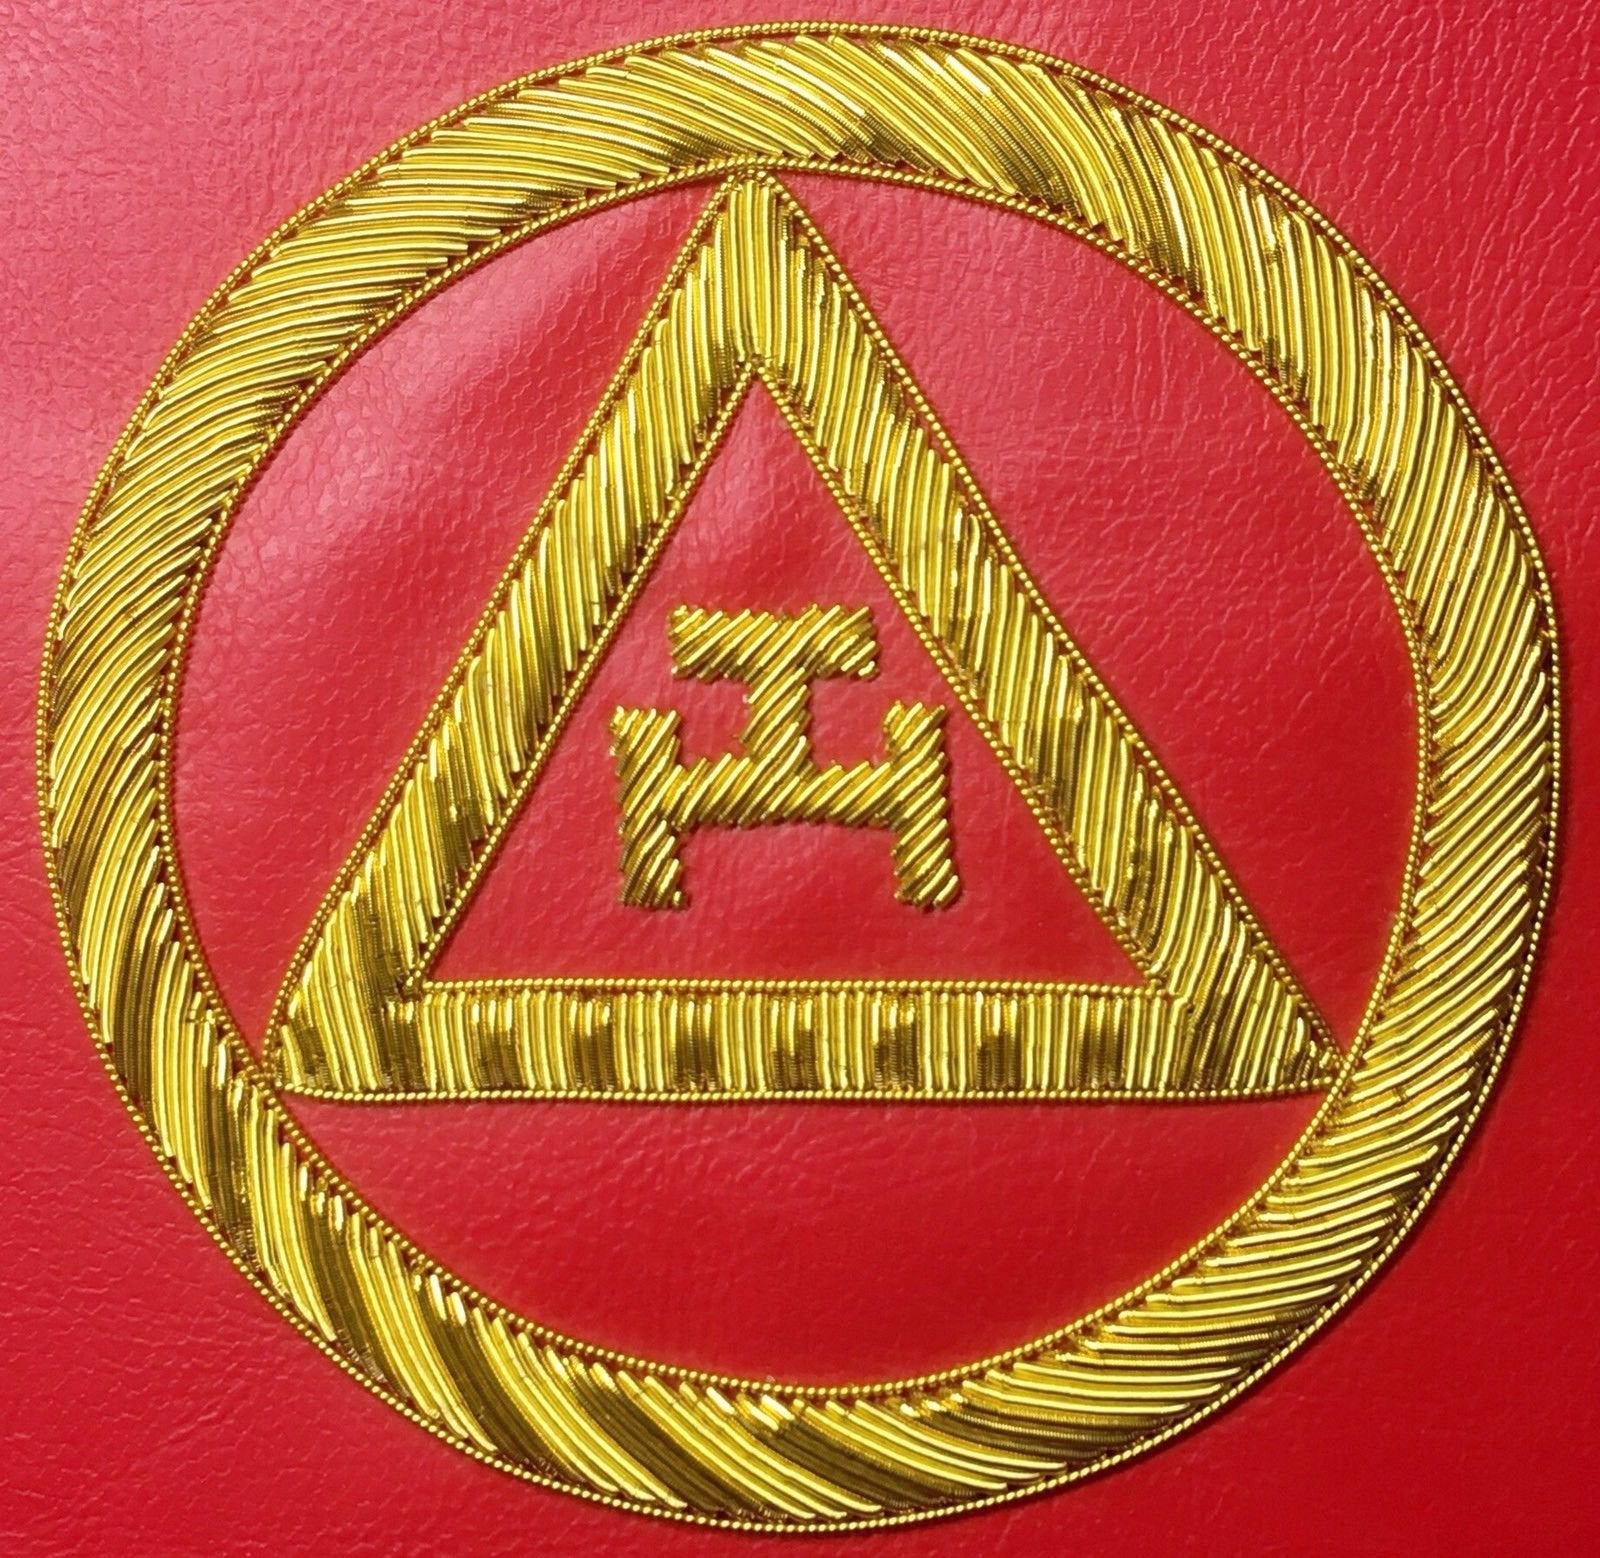 Royal Arch Chapter Apron Case - Red Triple Tau MM, WM, Provincial - Bricks Masons